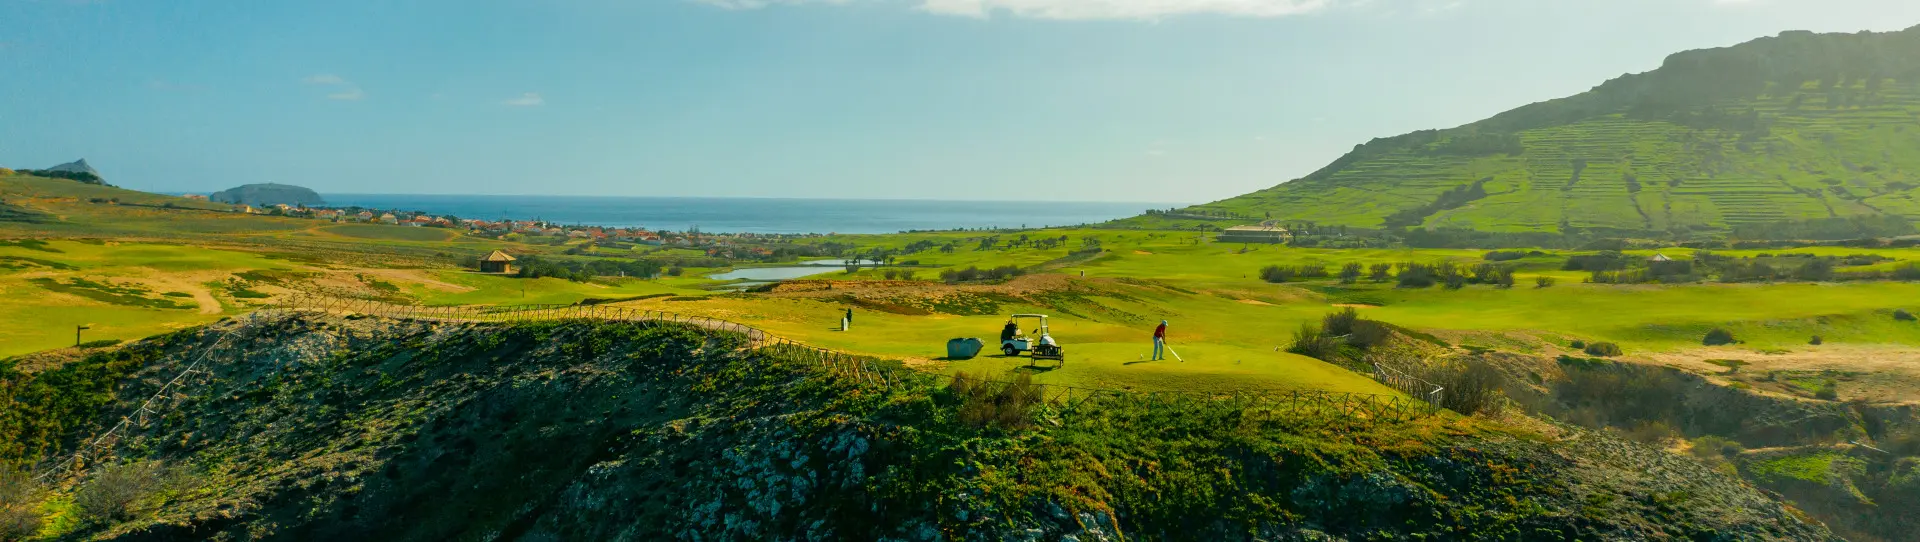 Portugal golf holidays - Madeira Golf Premium Passport 4 Rounds - Photo 2